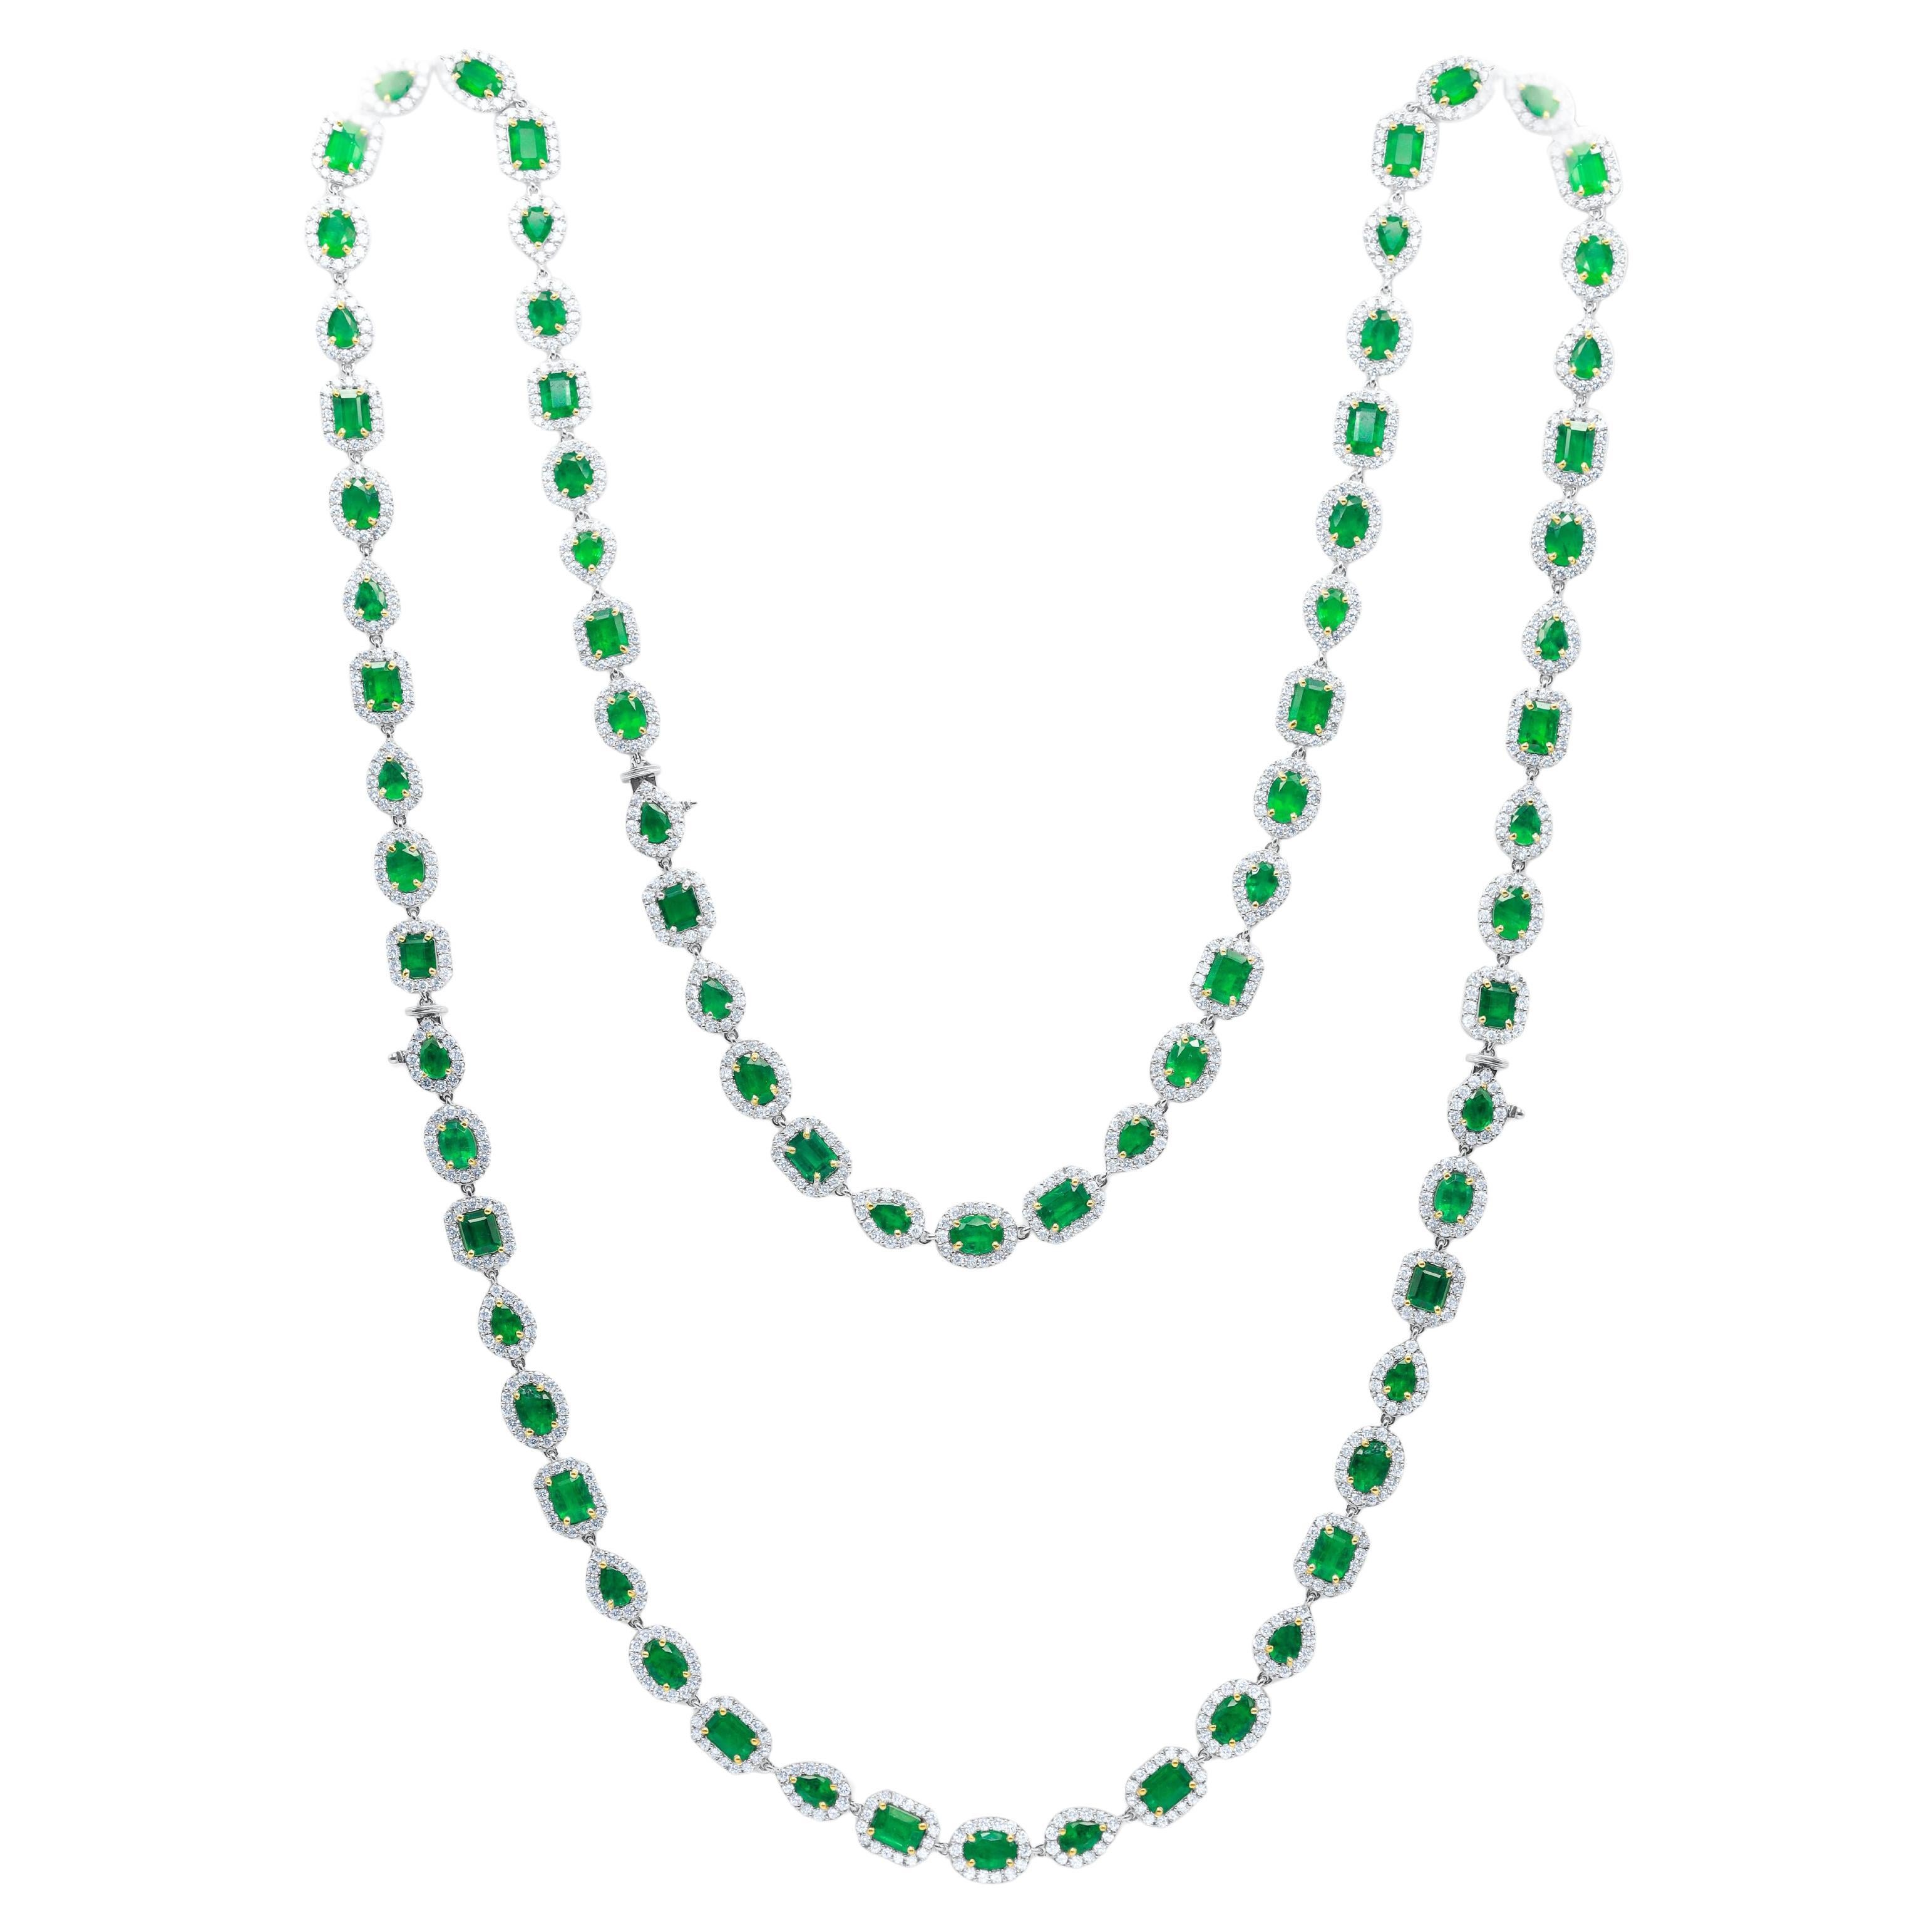 Diana M. Mixed Shape 46.10 Carat Emerald and Diamond Halo Necklace